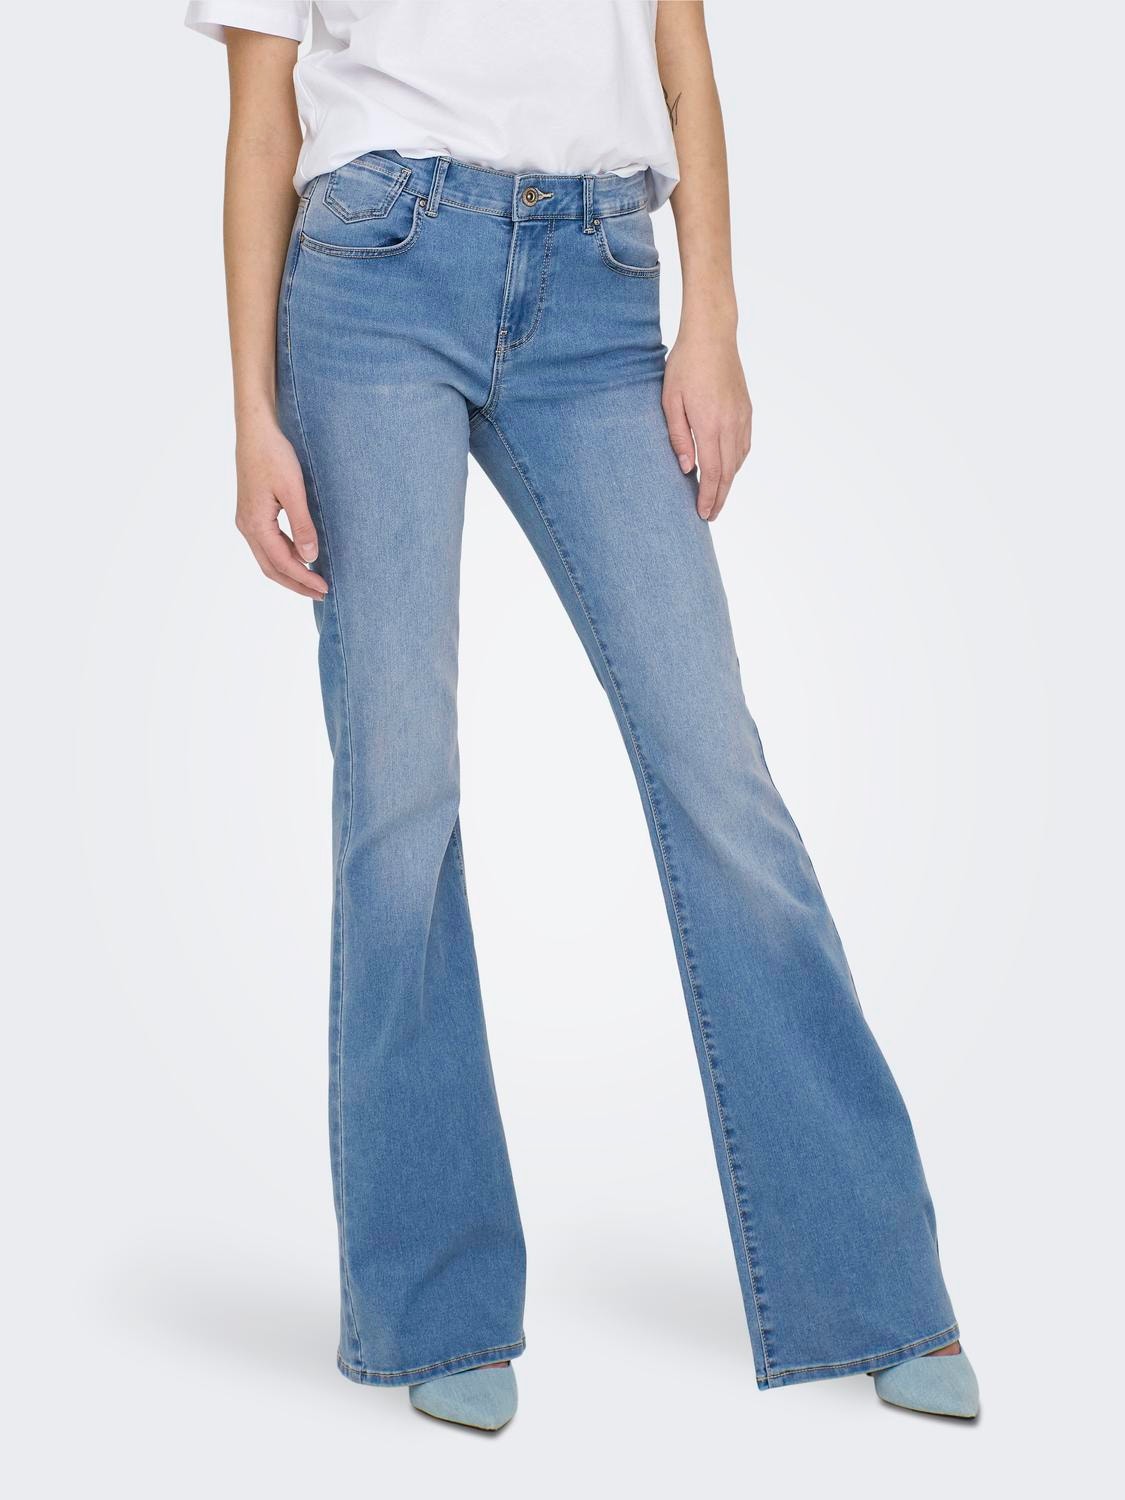 Flared Low Jeans - Light denim blue - Ladies